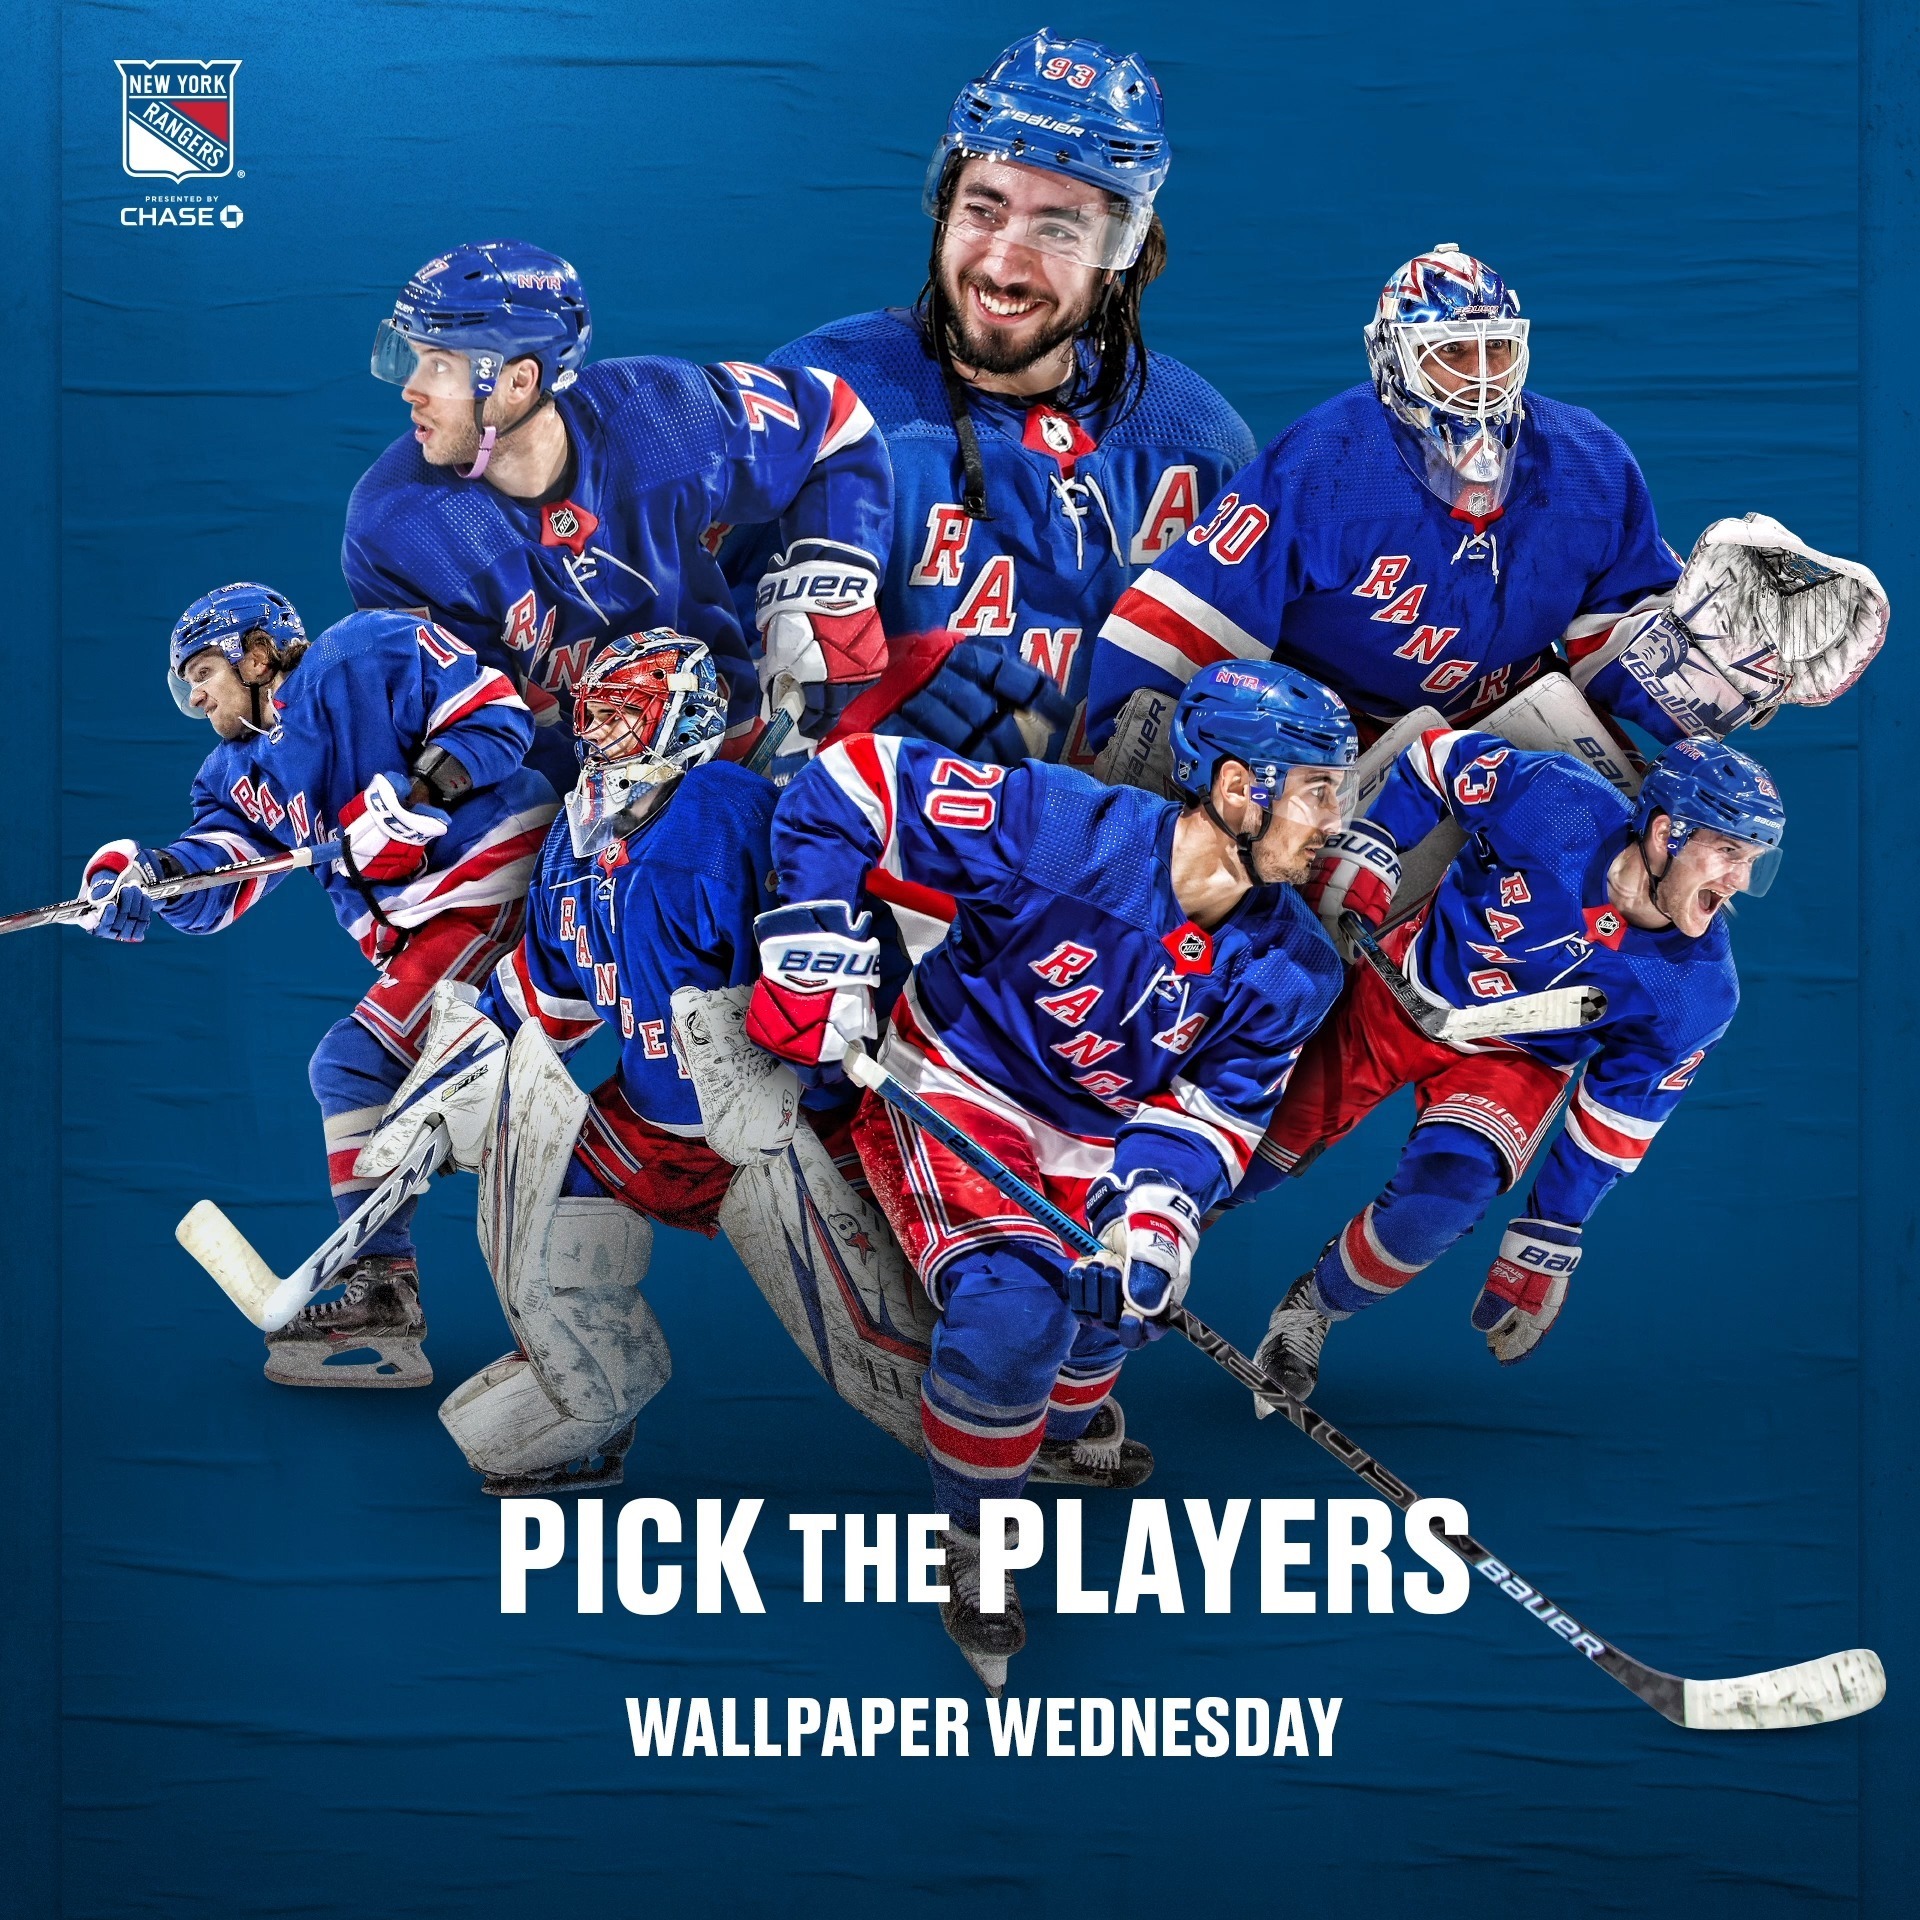 New York Rangers Wallpaper Wednesday Pick The Players